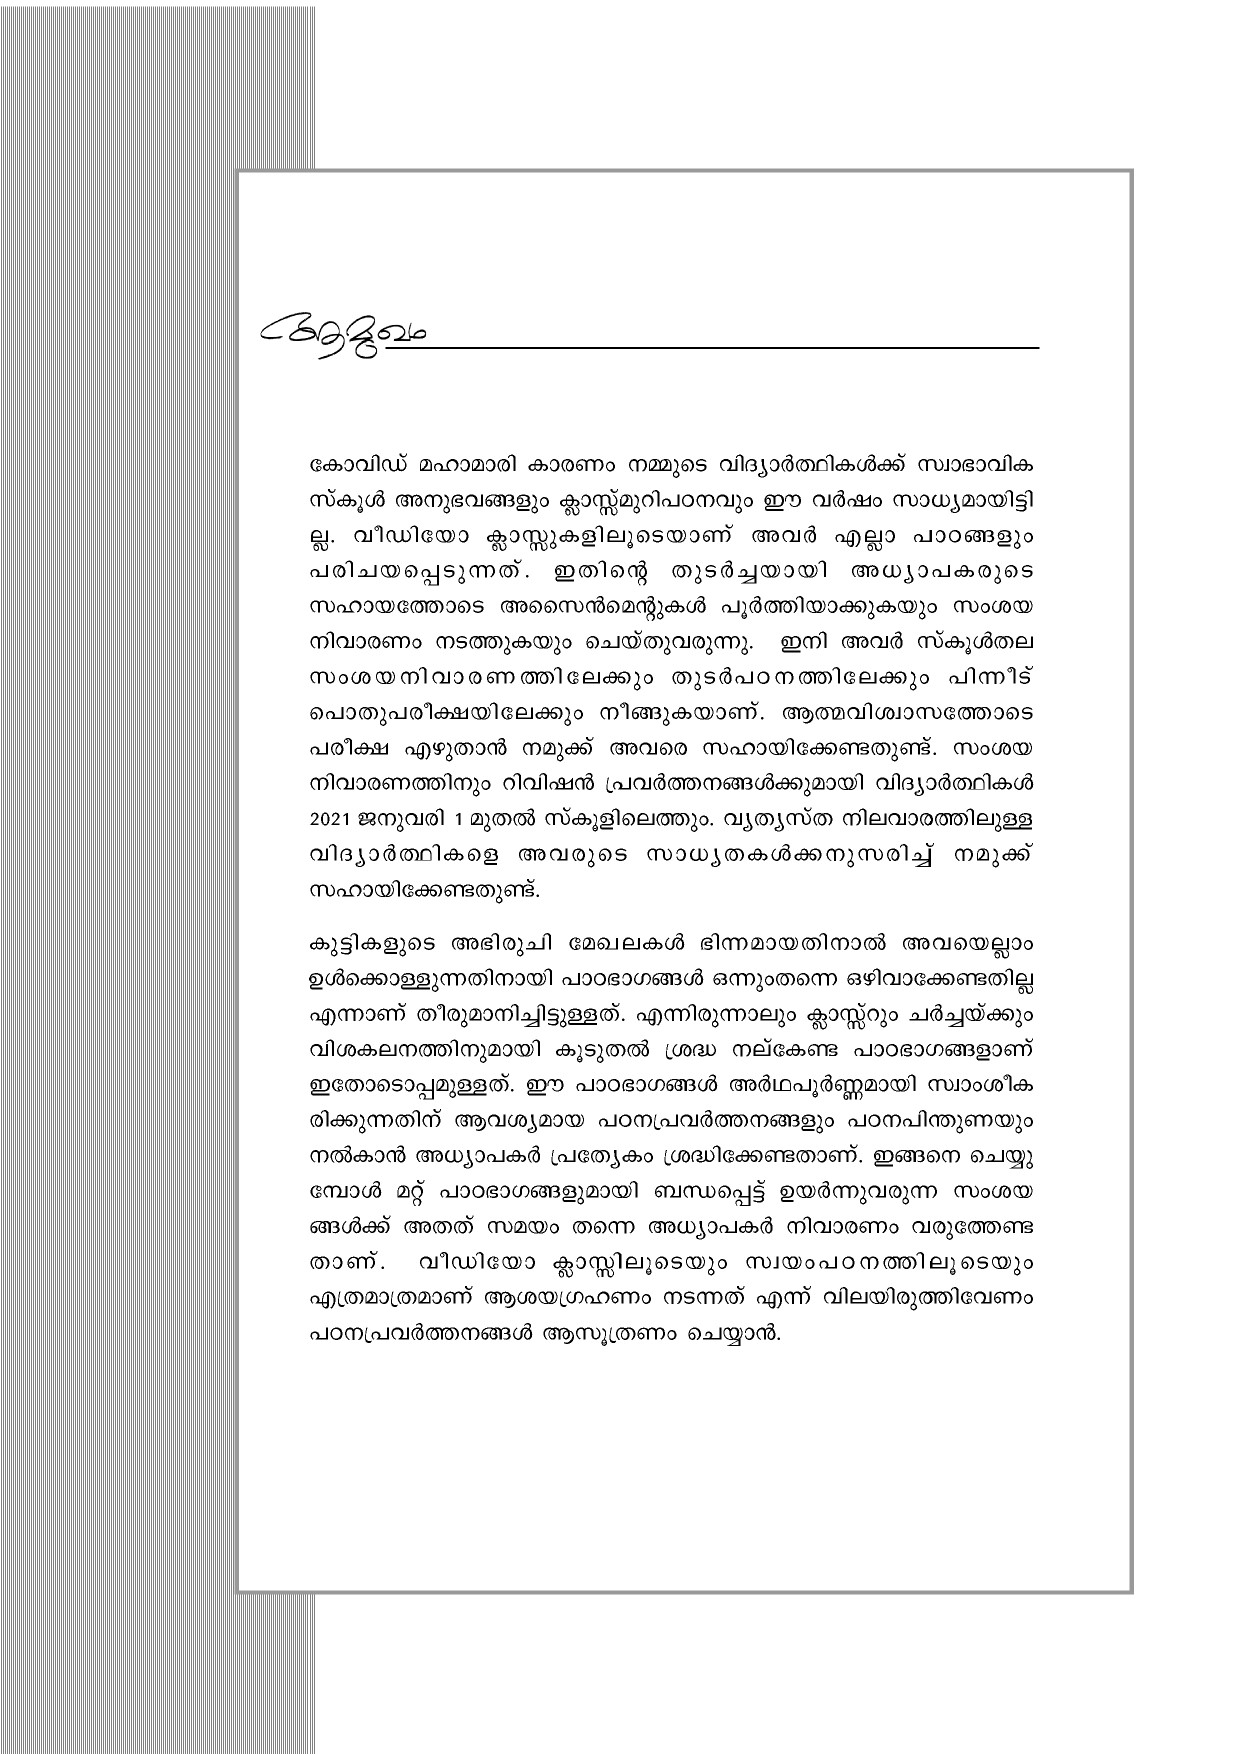 Kerala SSLC 2021 Focus Area - Notification Image 2